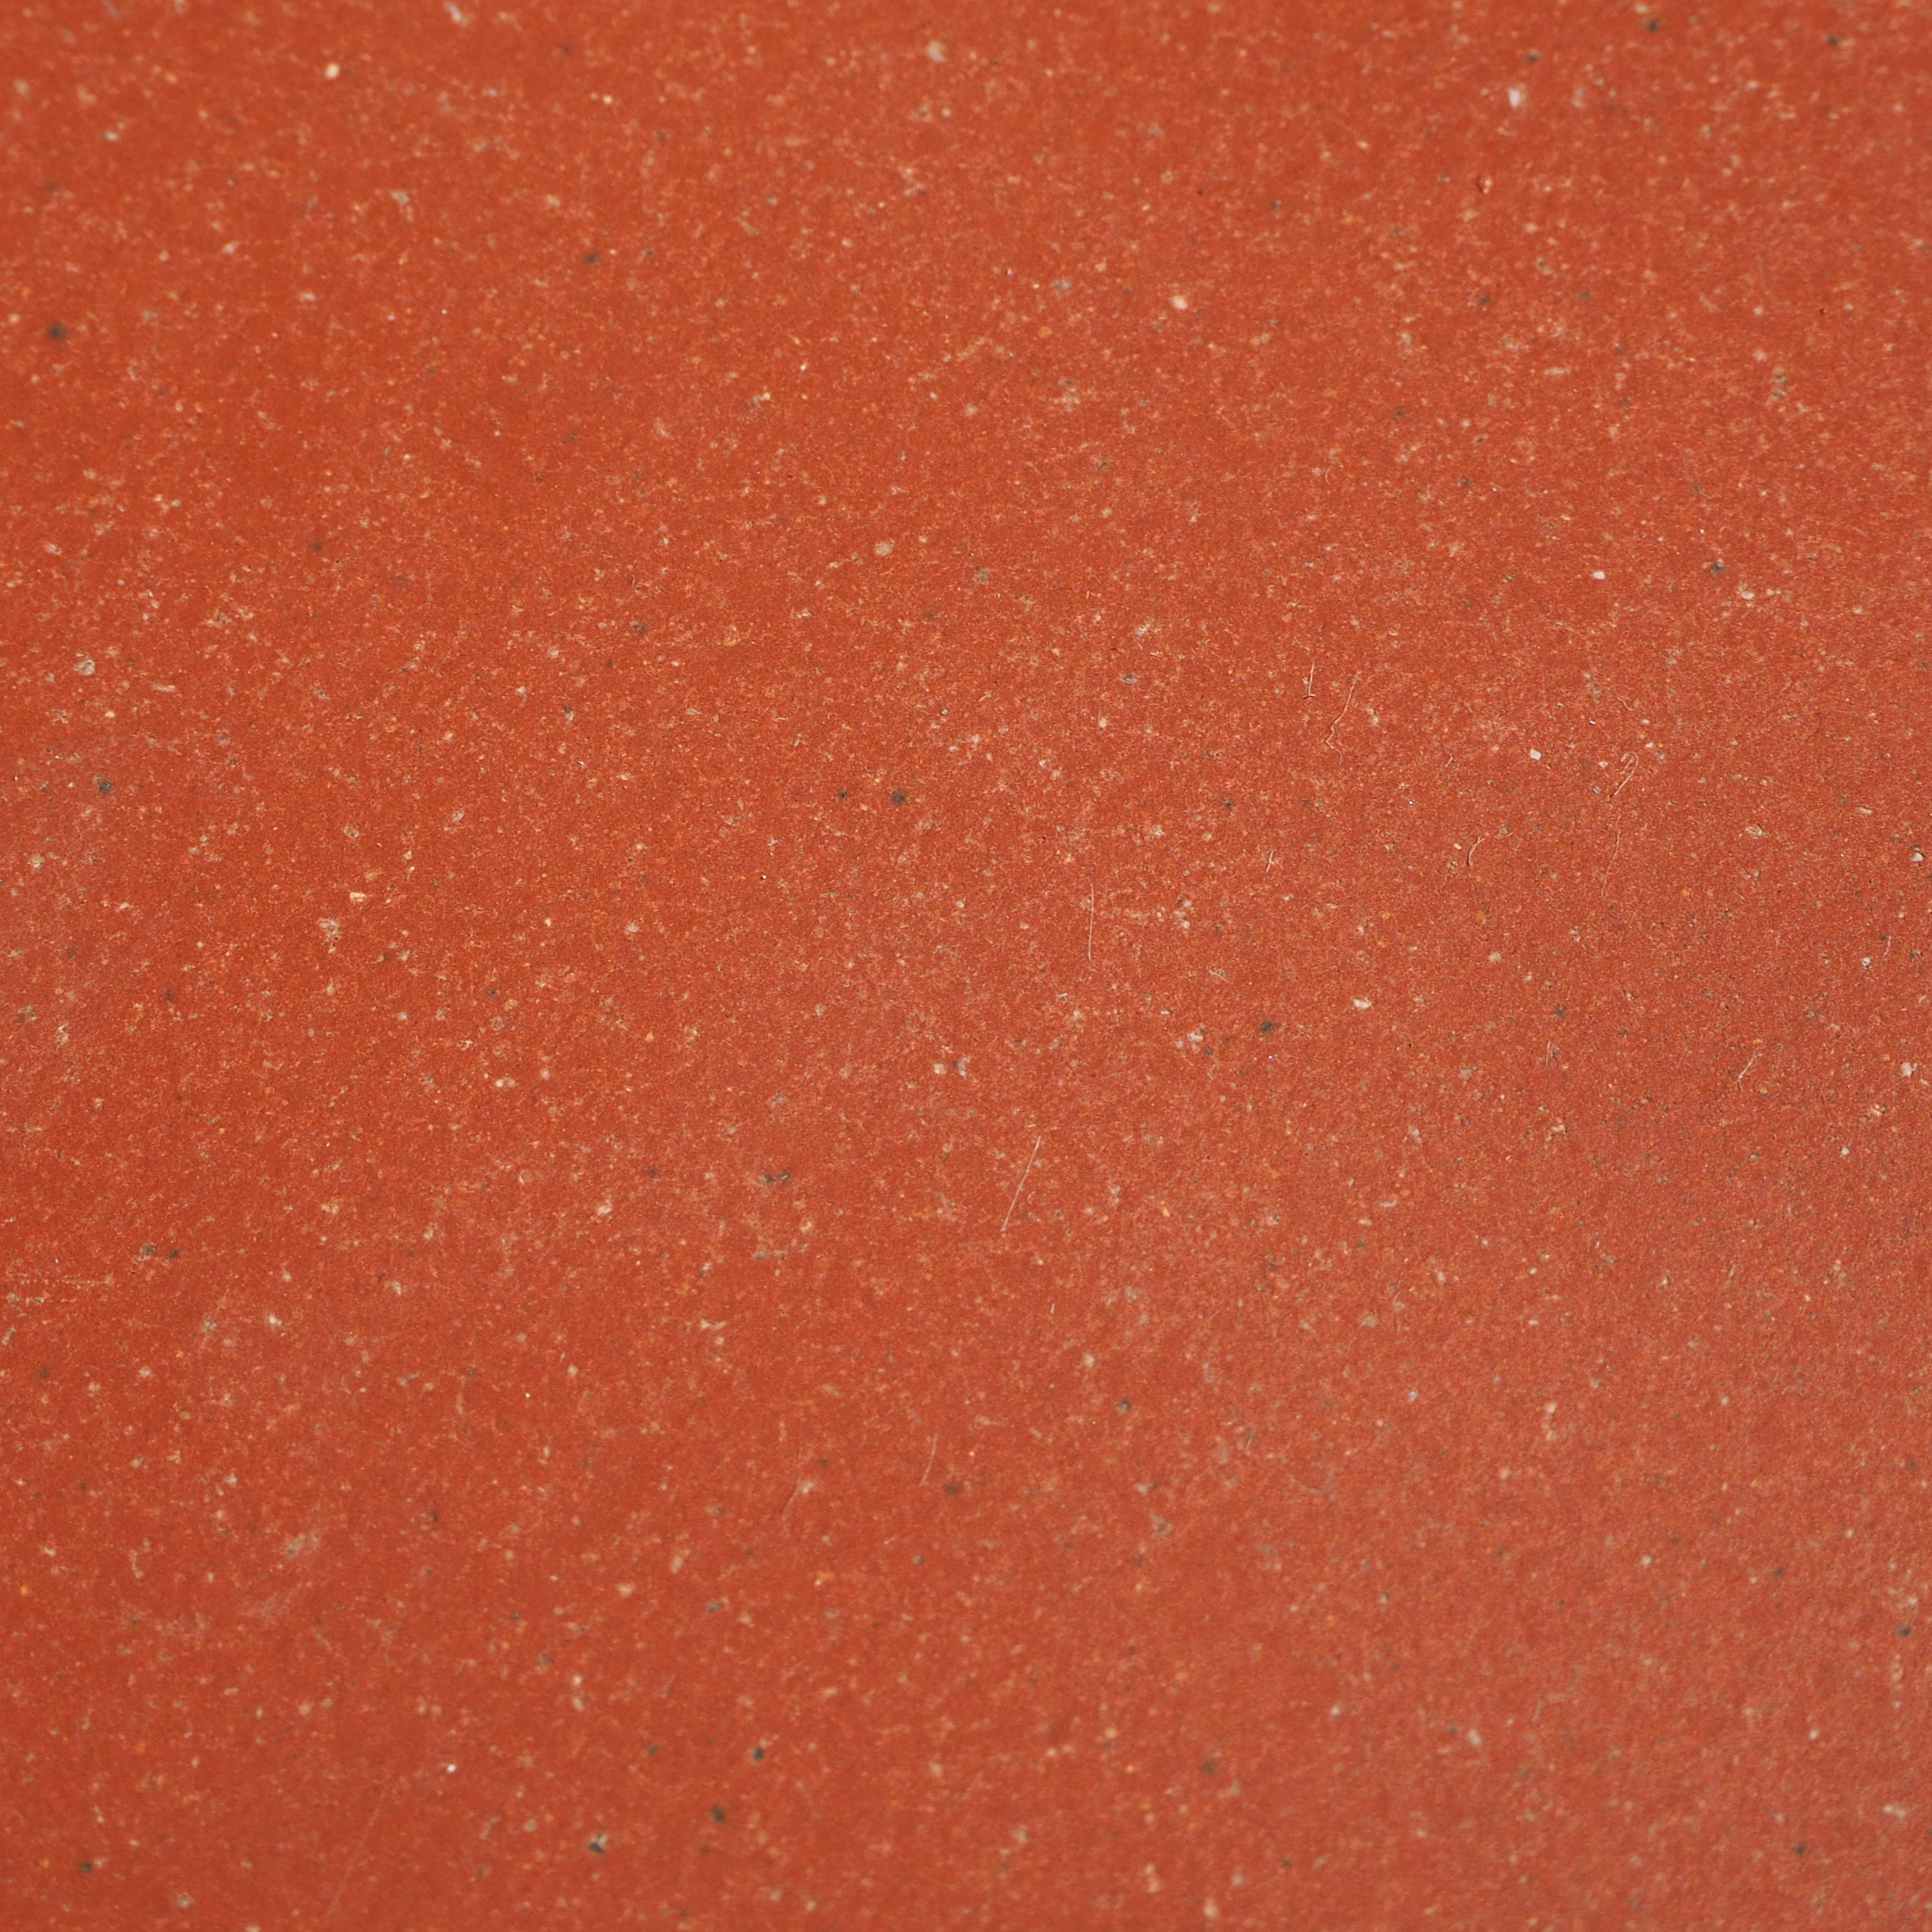 Red ceramic tiles (100 x 100 mm)